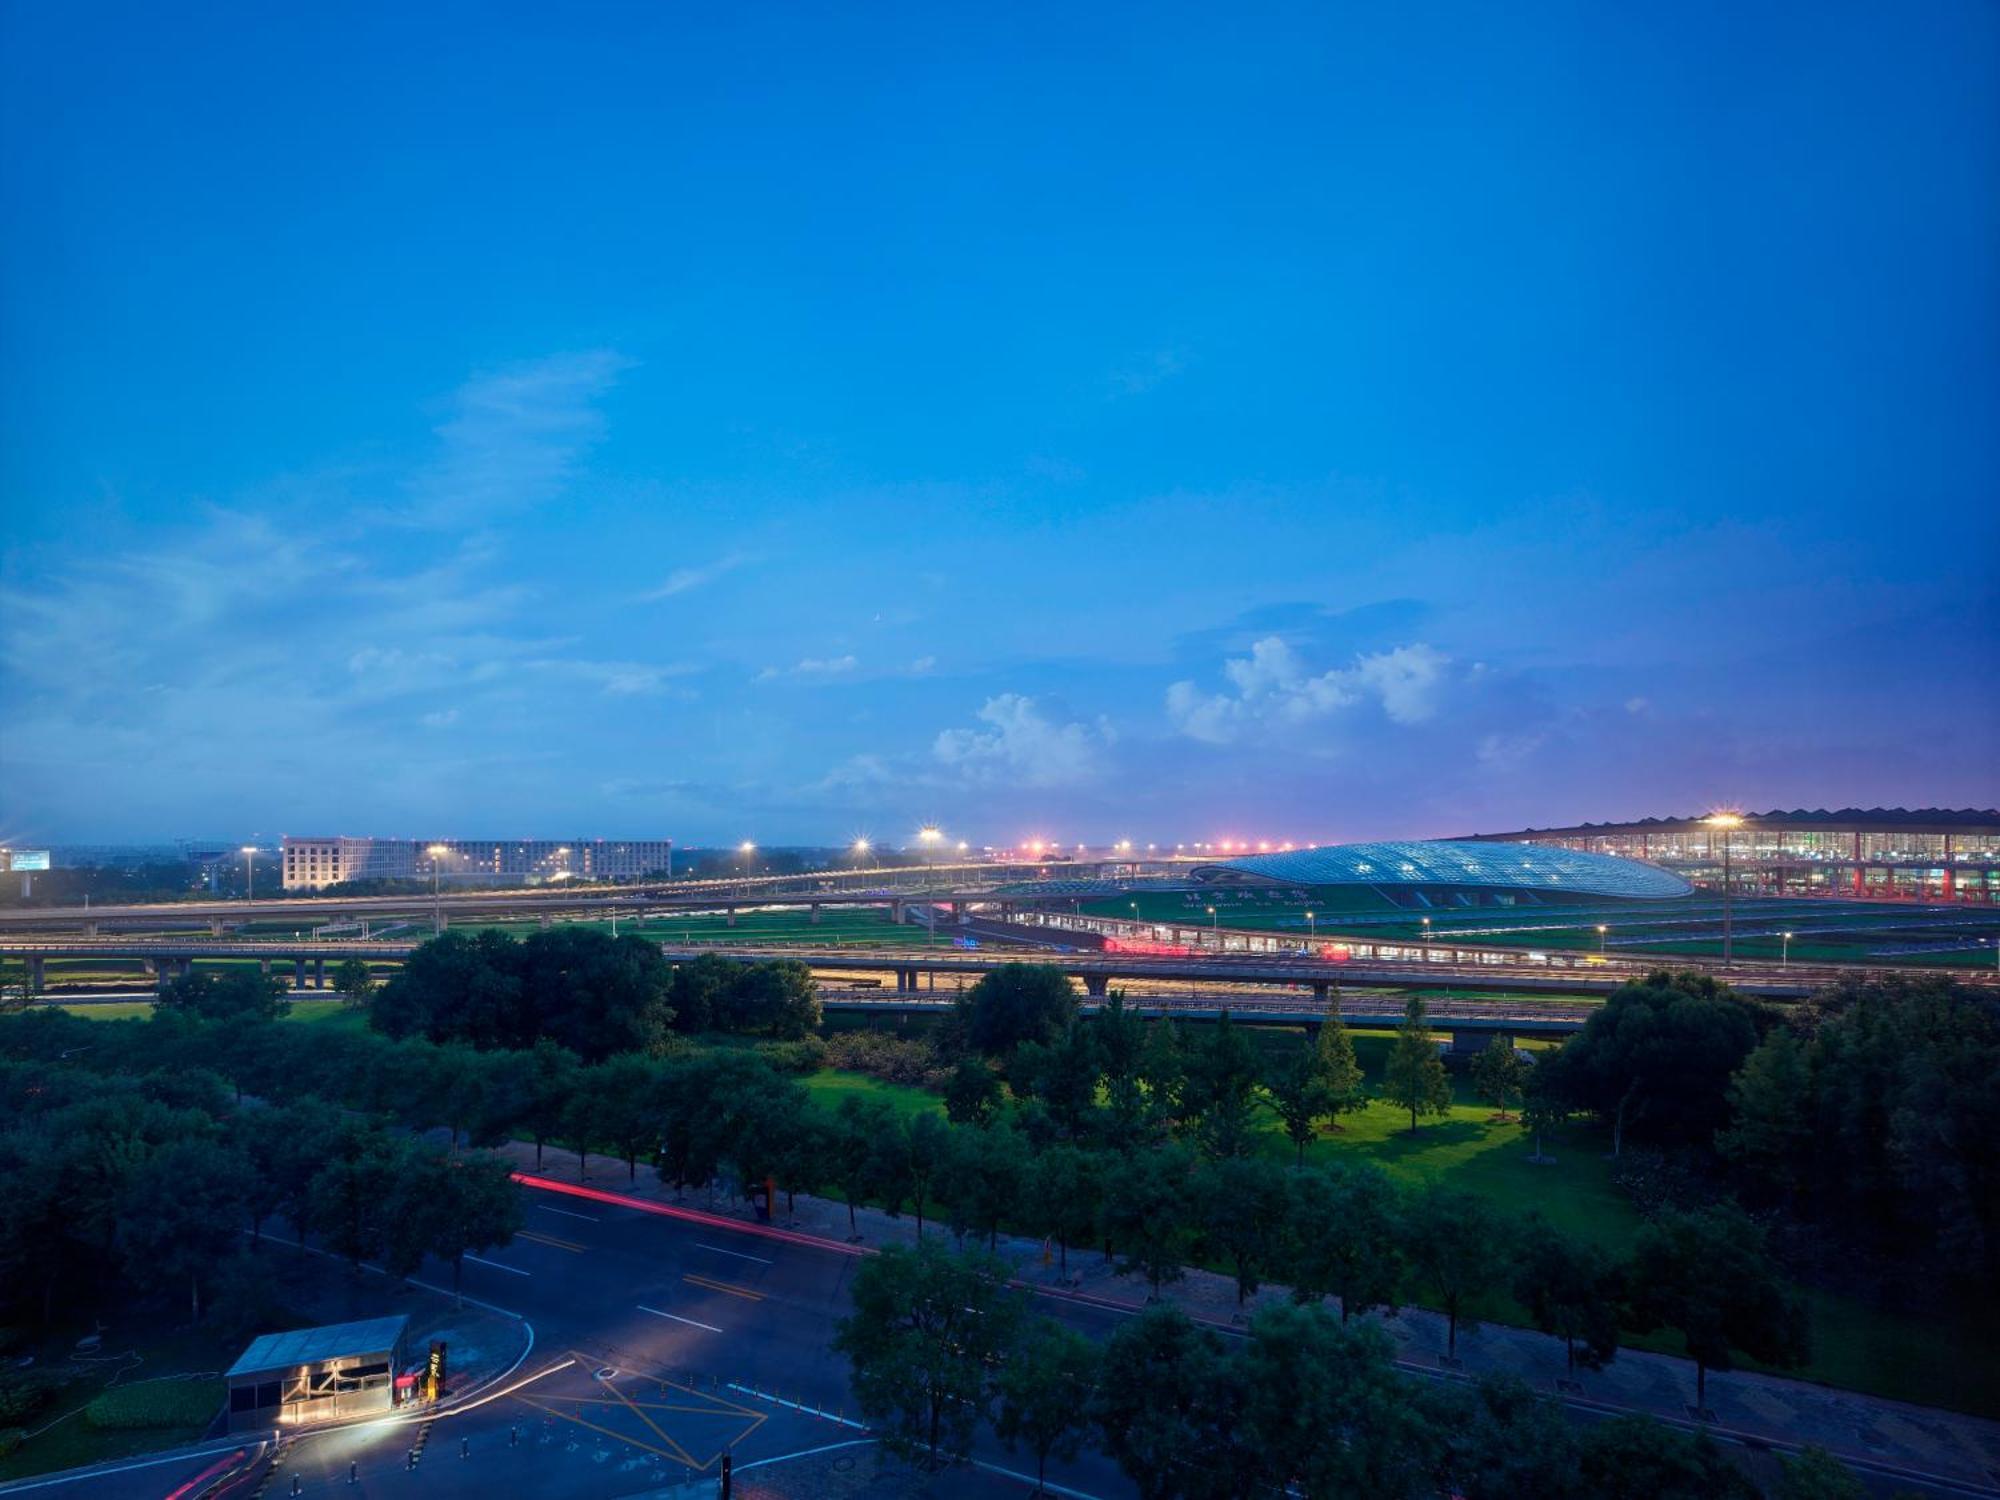 Hilton Beijing Capital Airport Hotel Shunyi Exterior photo